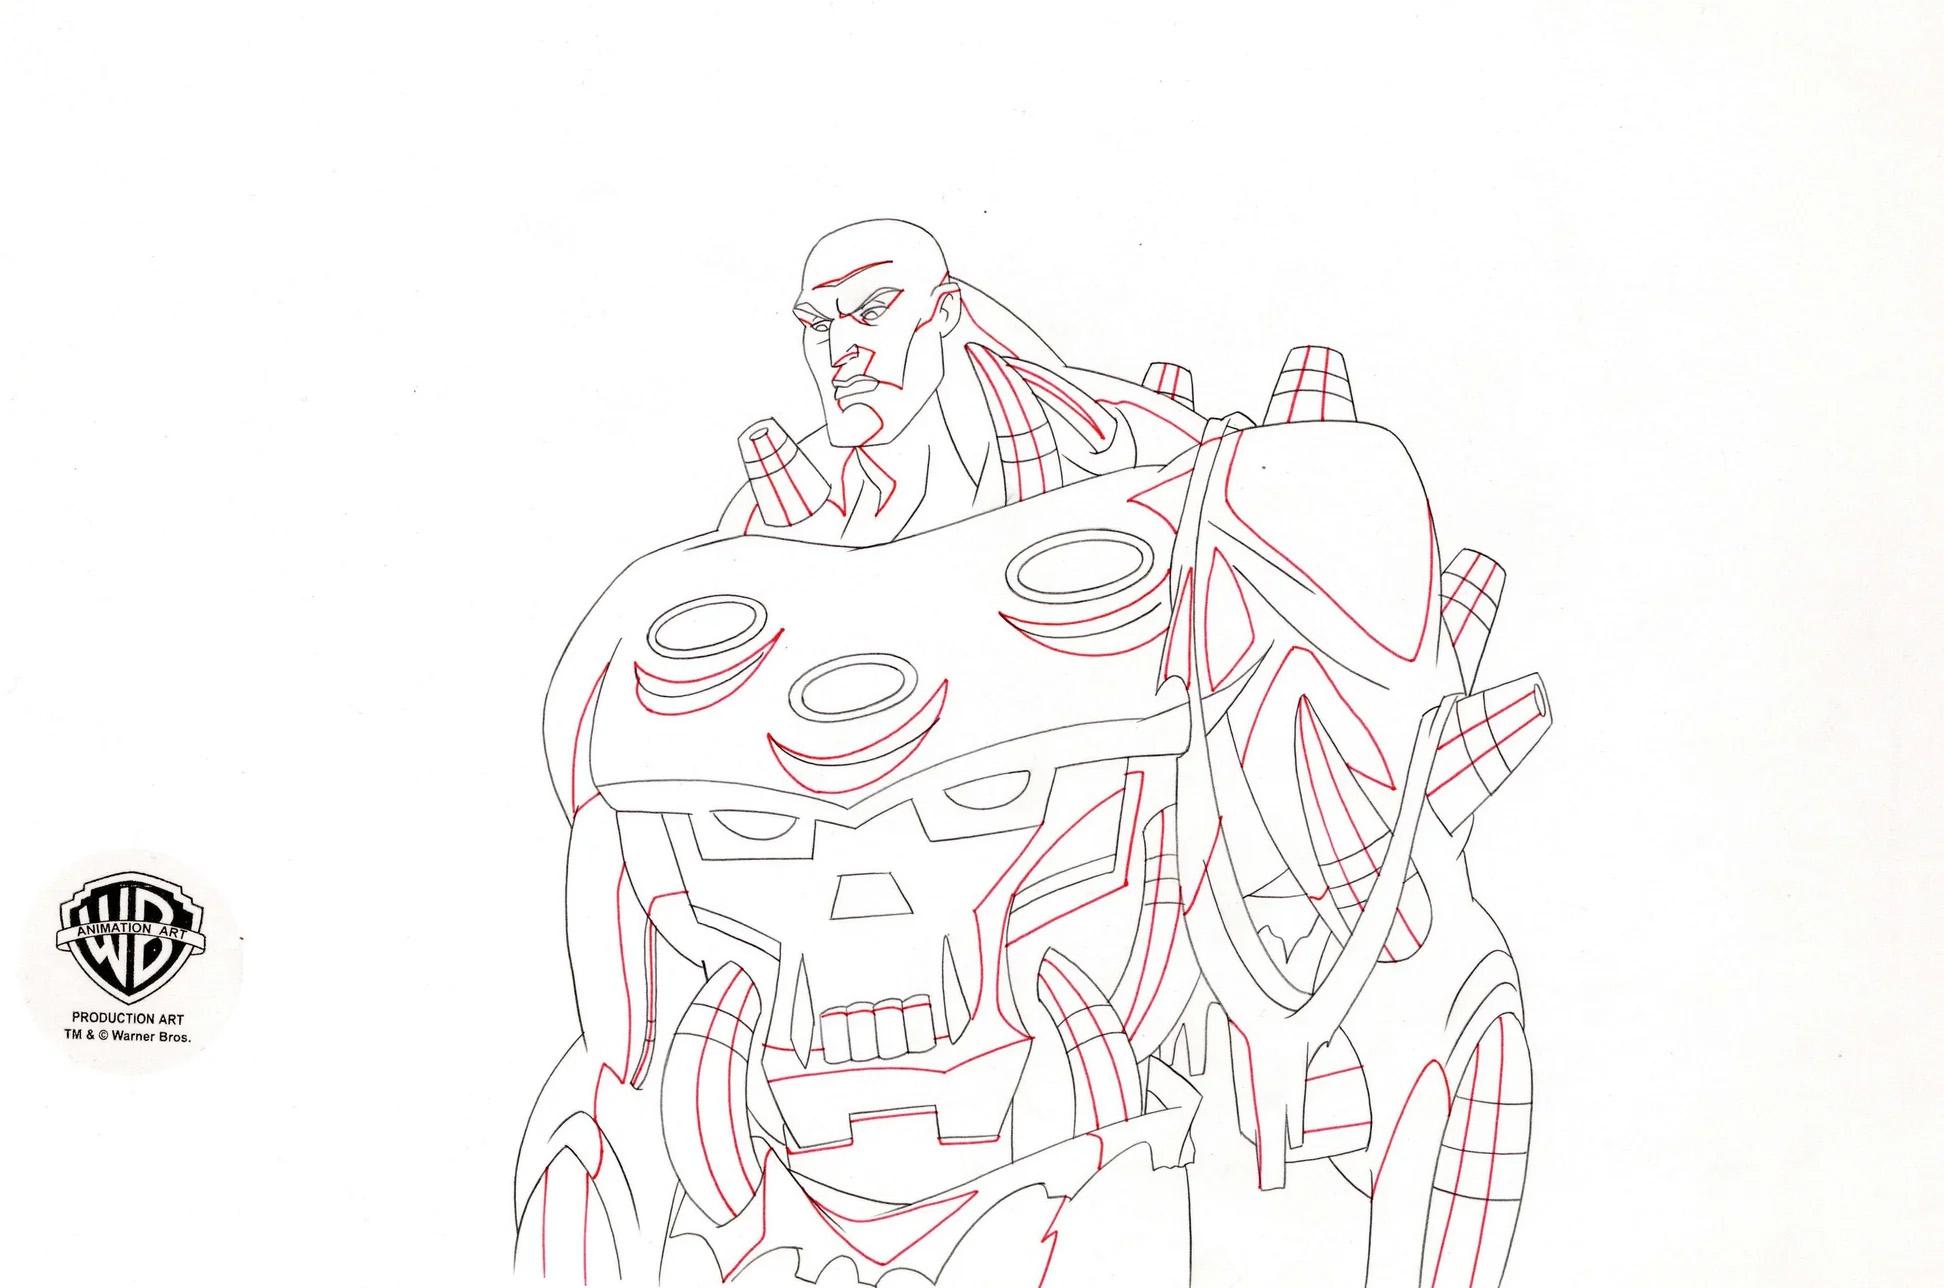 Justice League Original Production Drawing: Lex Luthor - Art by DC Comics Studio Artists